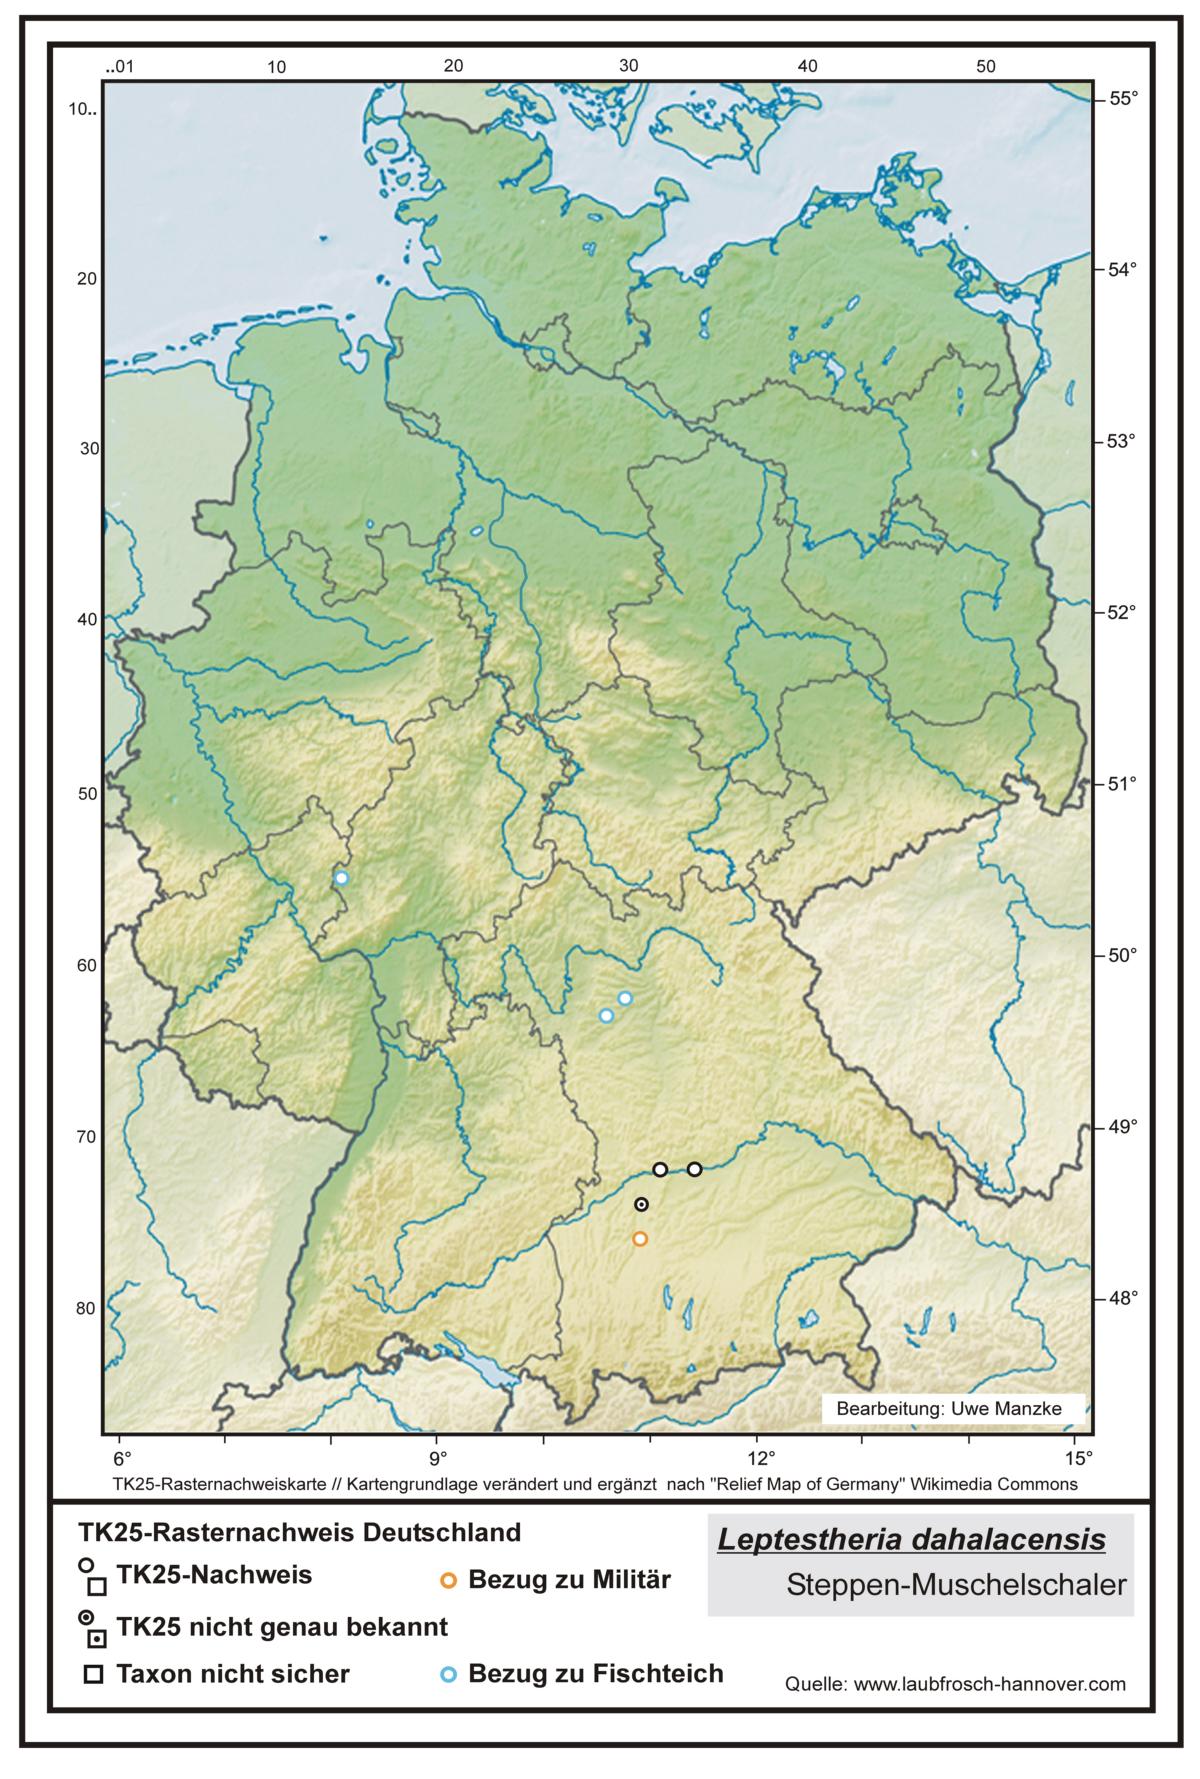 Leptestheria dahalacensis TK25-Rasternachweiskarte Deutschland, Bearbeitung Uwe Manzke; Kartengrundlage: verändert n. Relief Map of Germany Wikimedia Commons https://commons.wikimedia.org/wiki/File:Relief_Map_of_Germany.svg